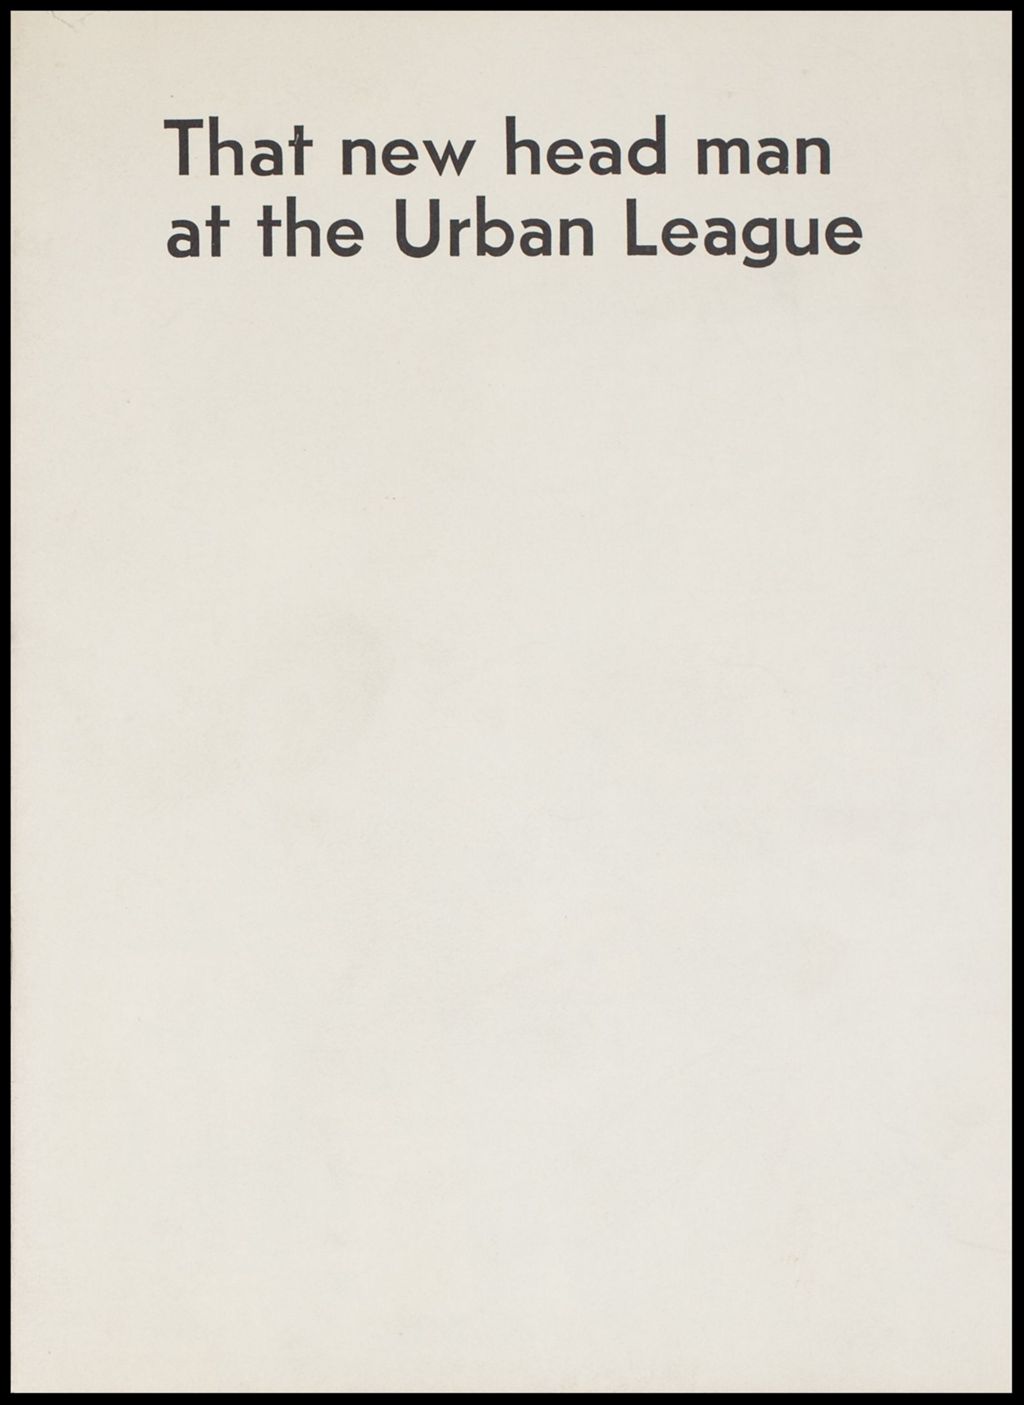 Miniature of CUL Brochures, 1968 (Folder IV-697)